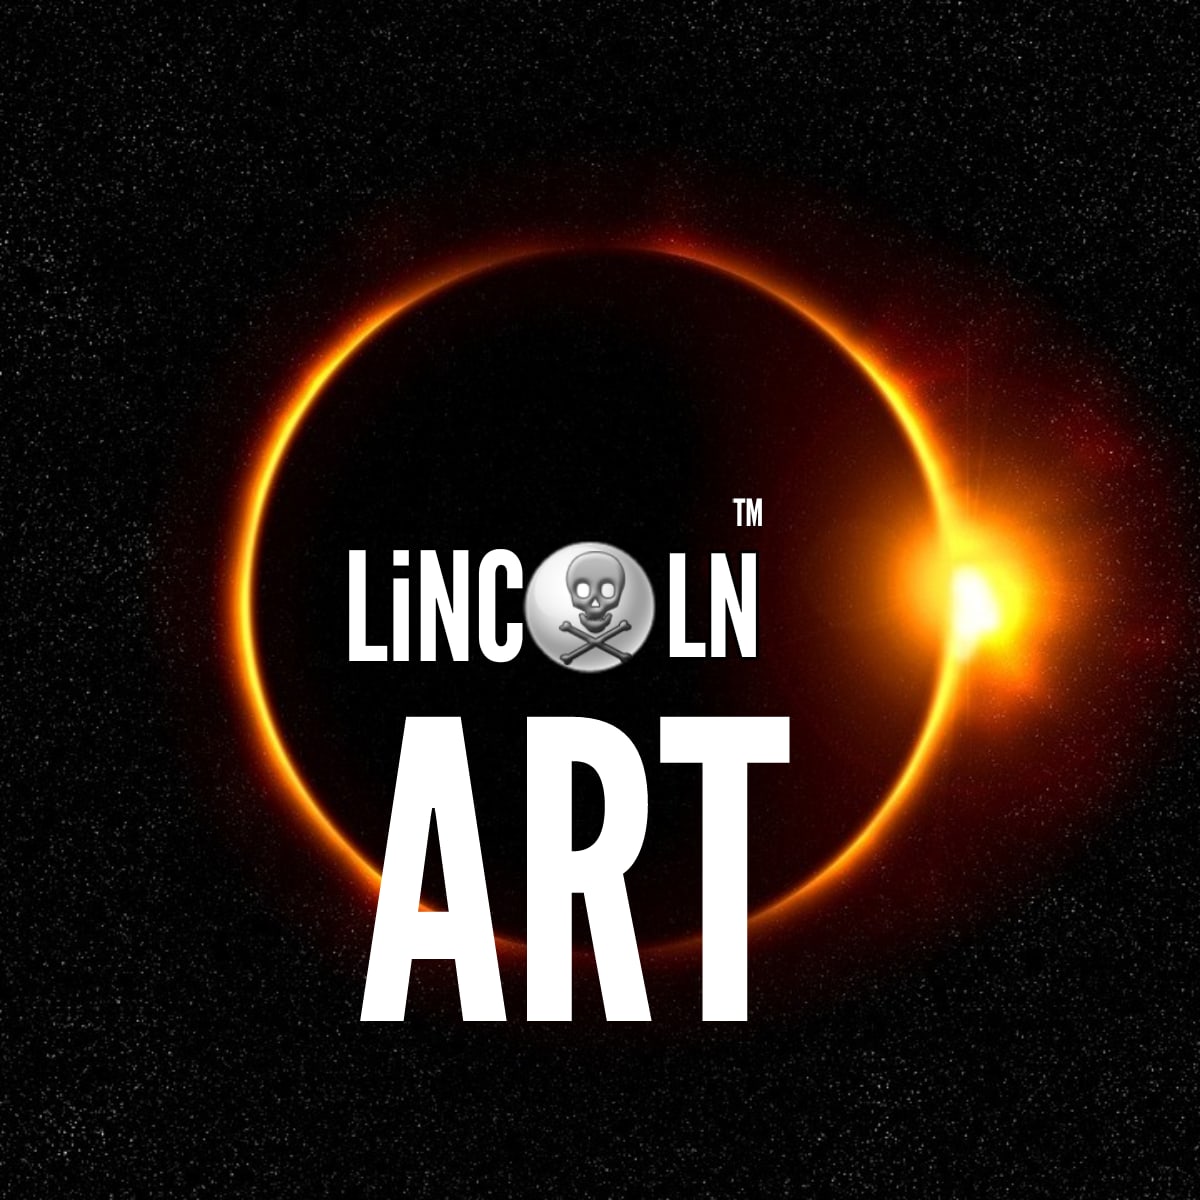 Lincoln Art